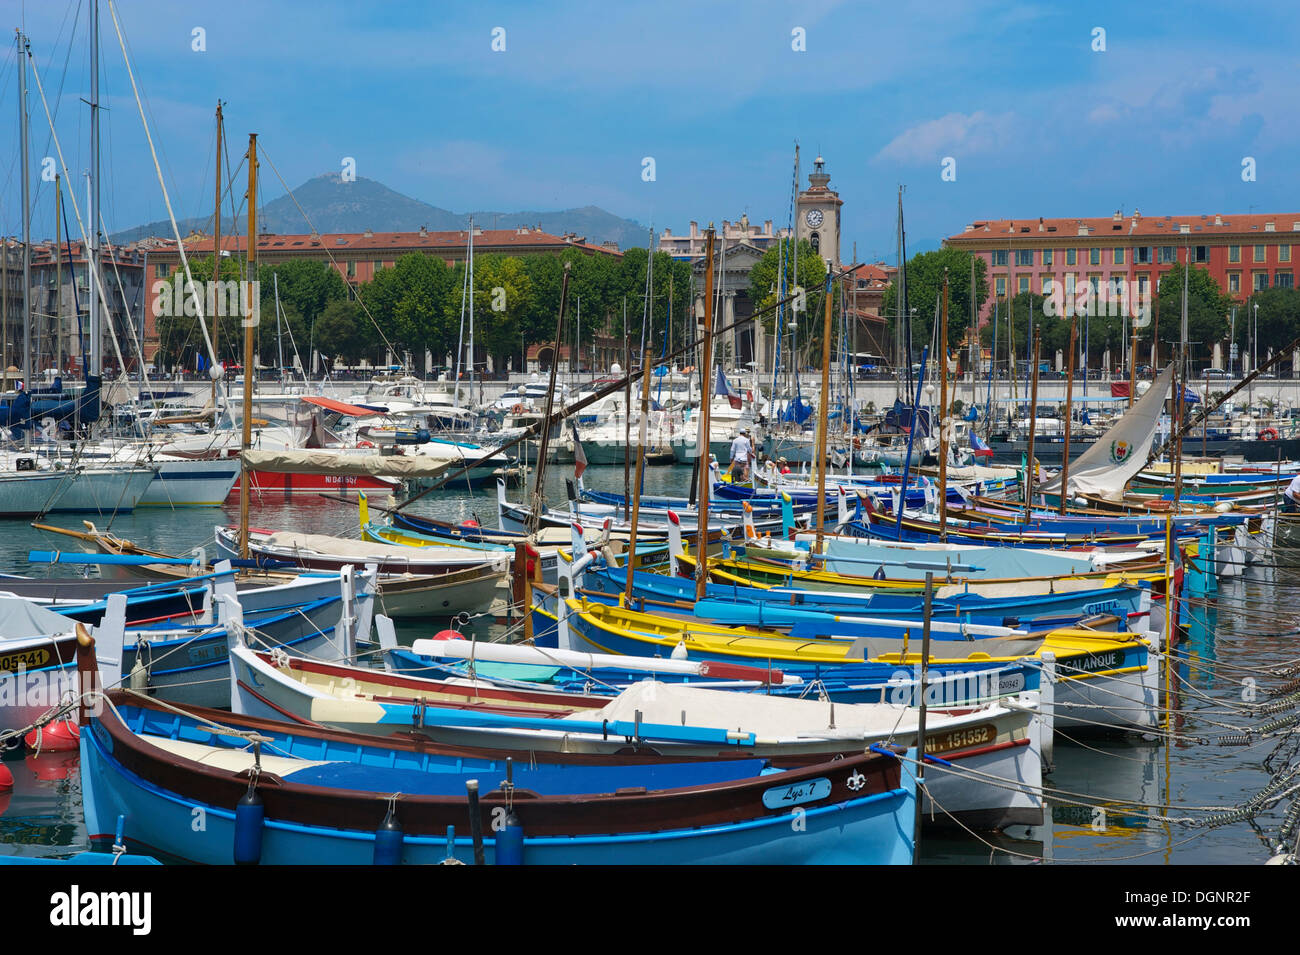 Port Lympia, Quartier du Port, Nice, French Riviera, Alpes-Maritimes, Provence-Alpes-Côte d’Azur, France Stock Photo